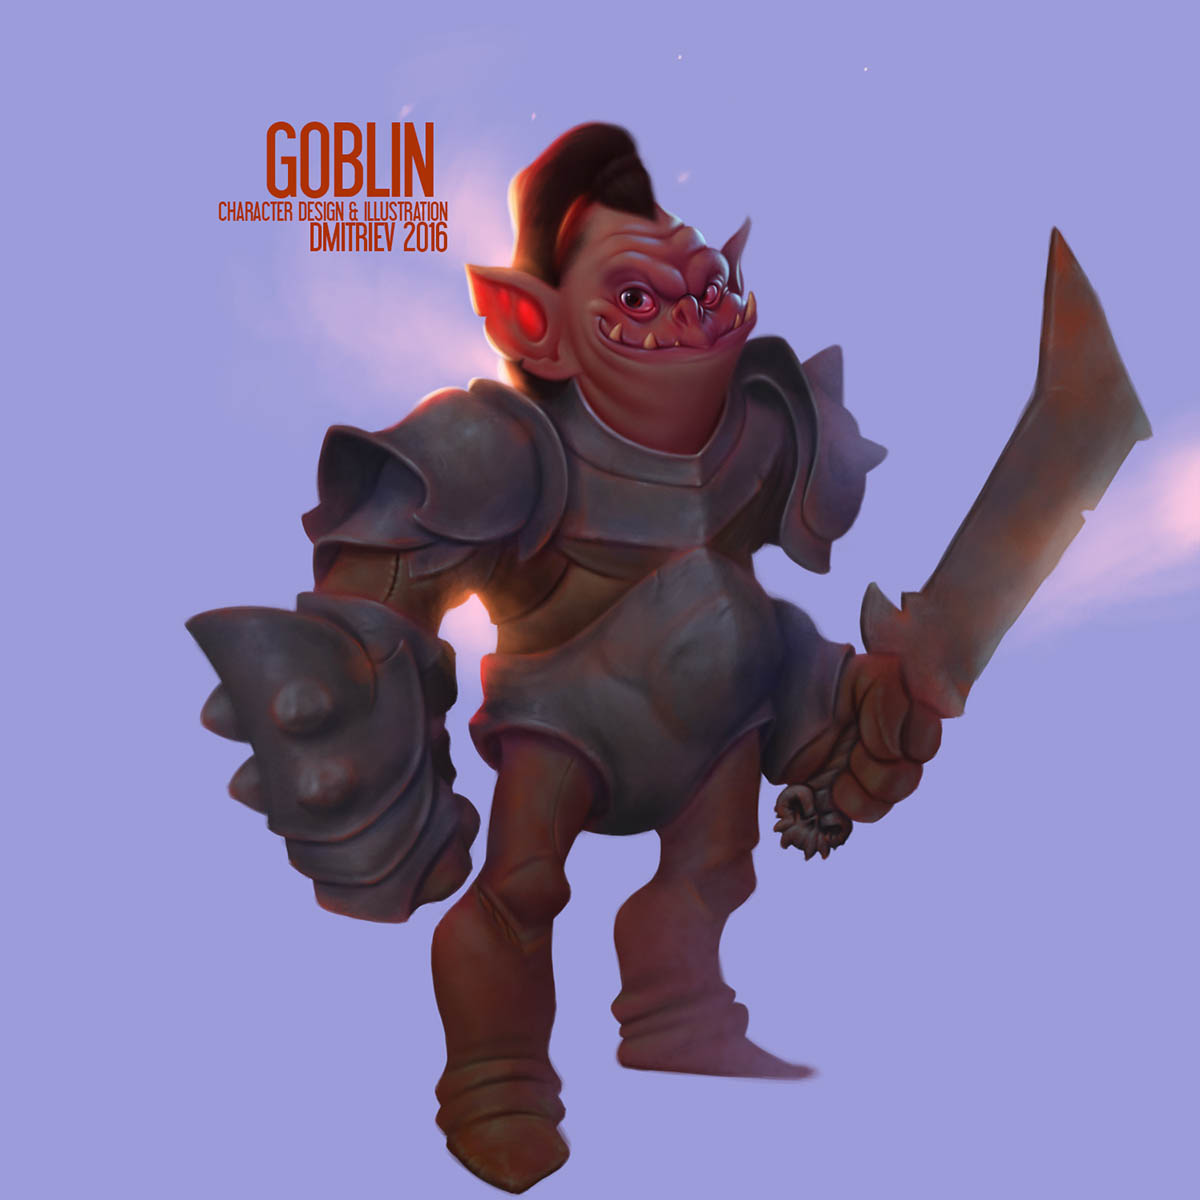 goblin character design